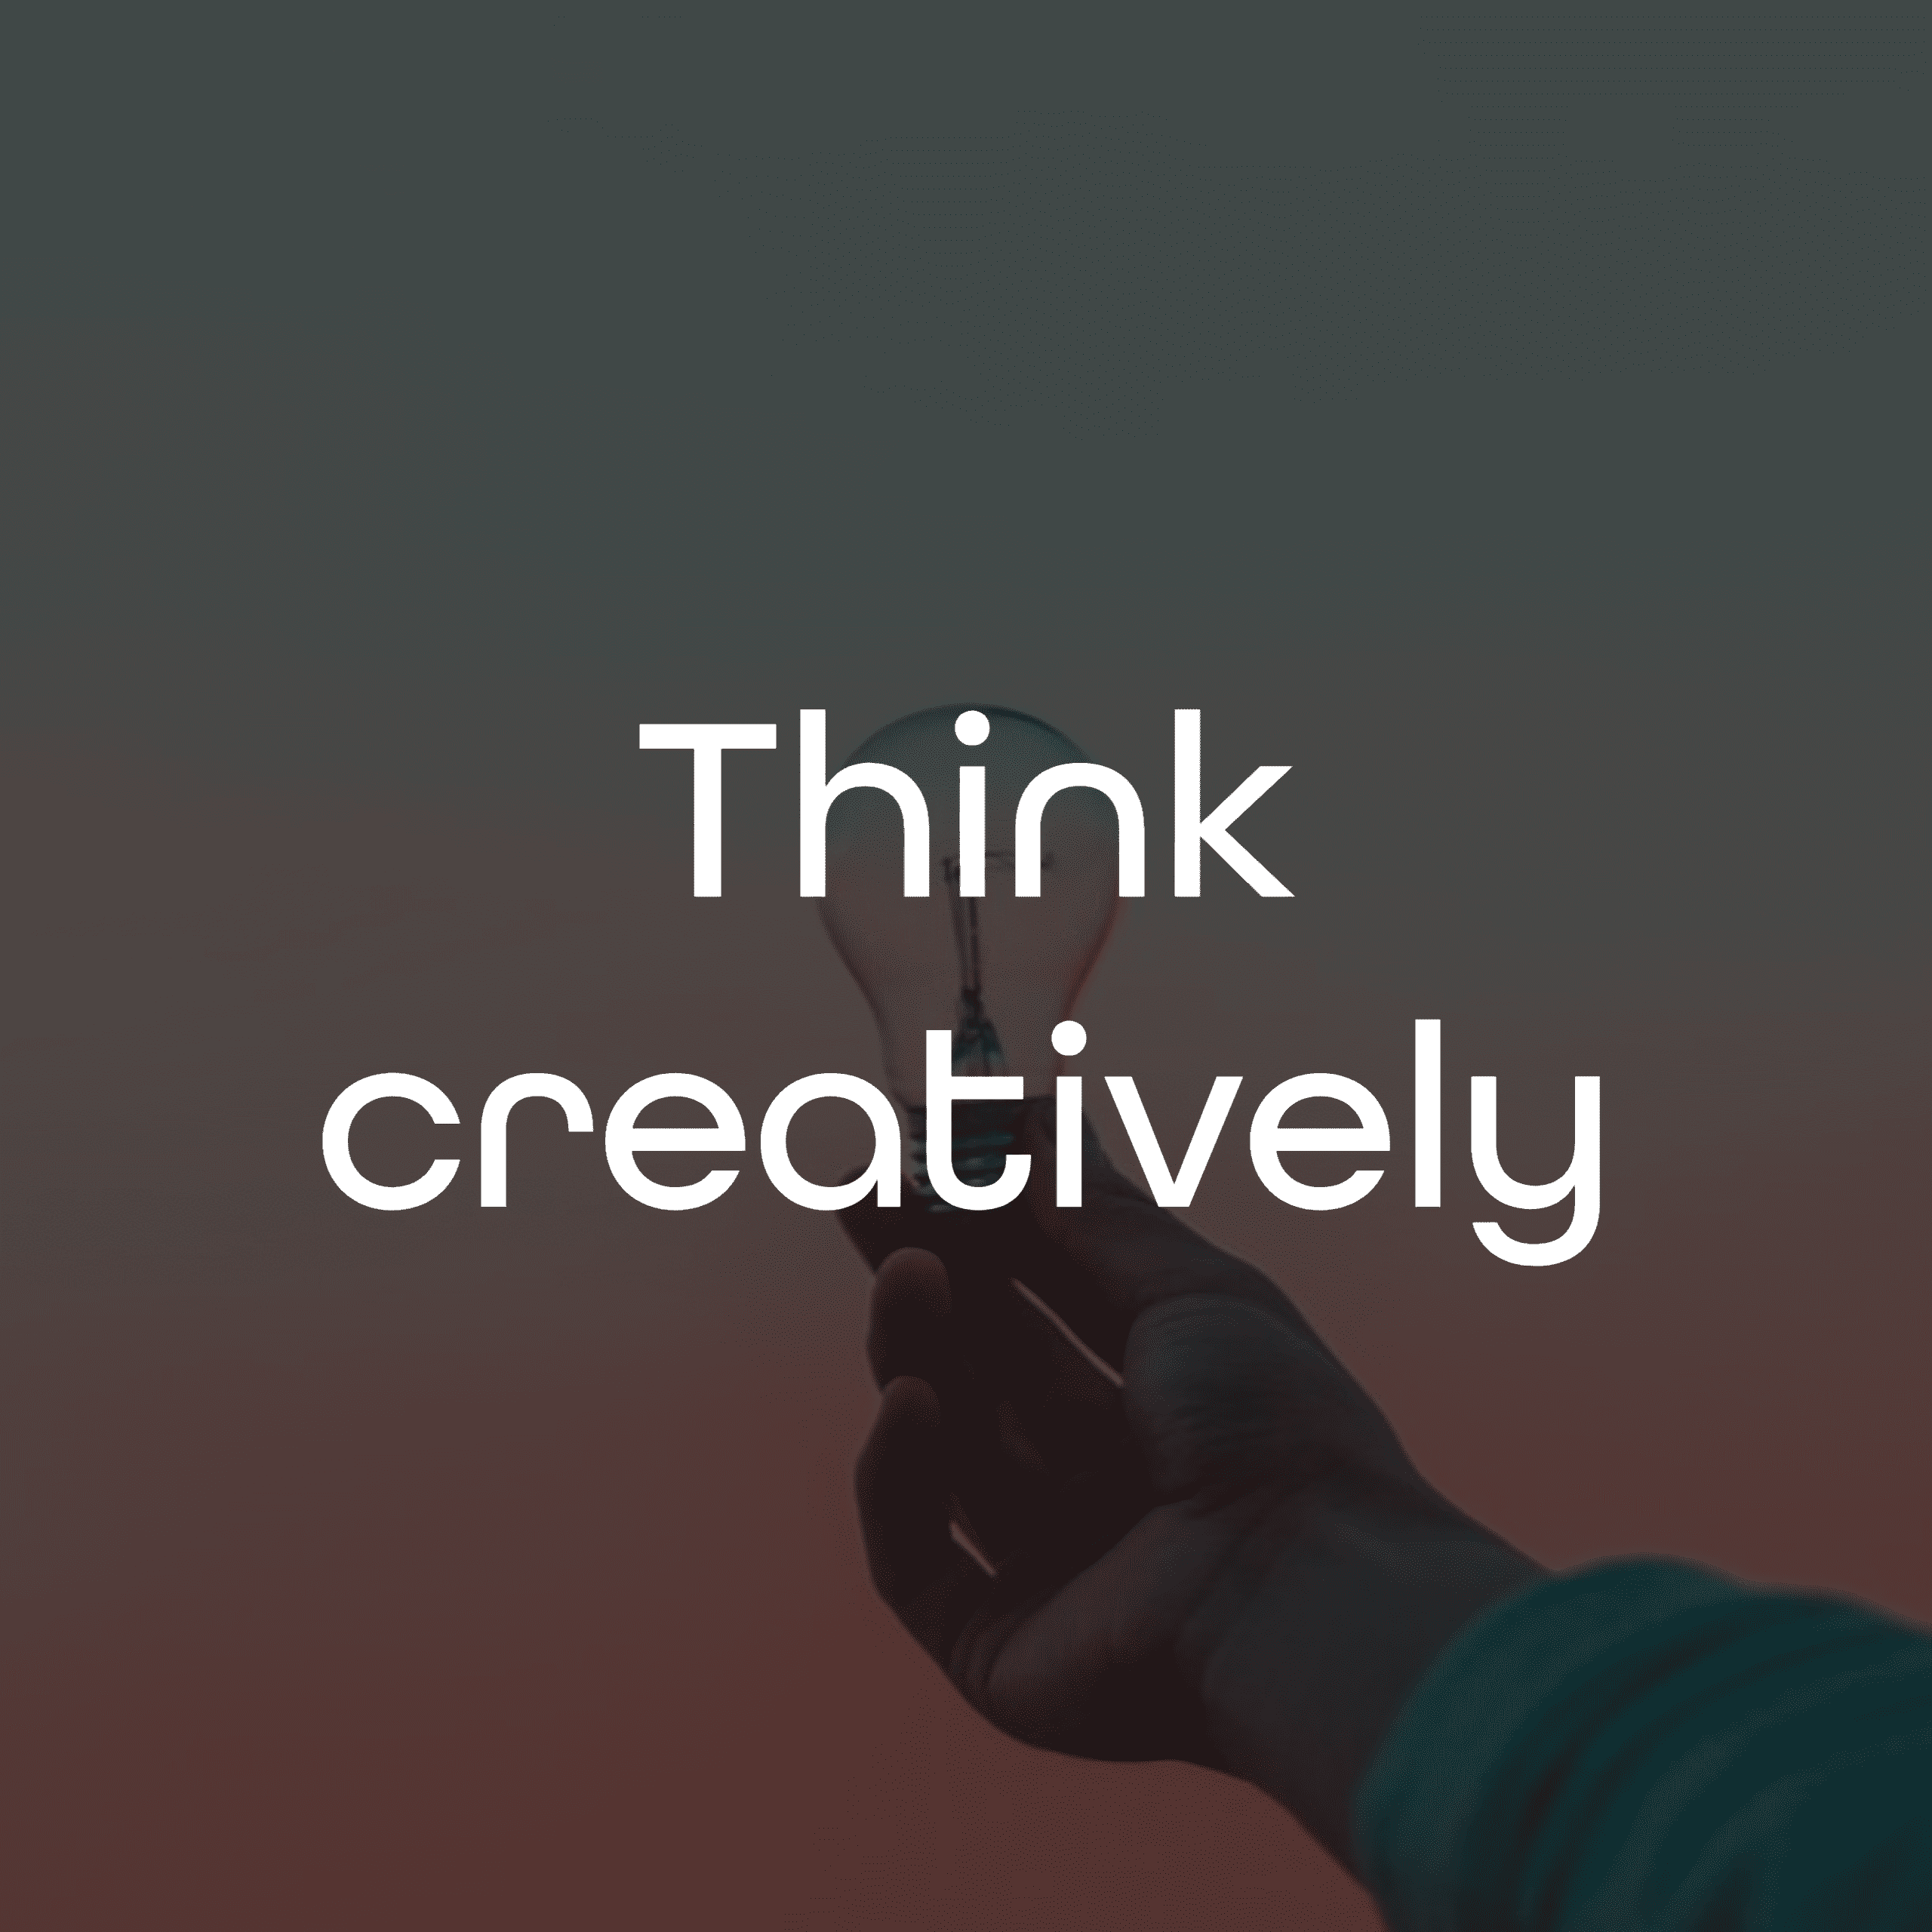 Think creatively